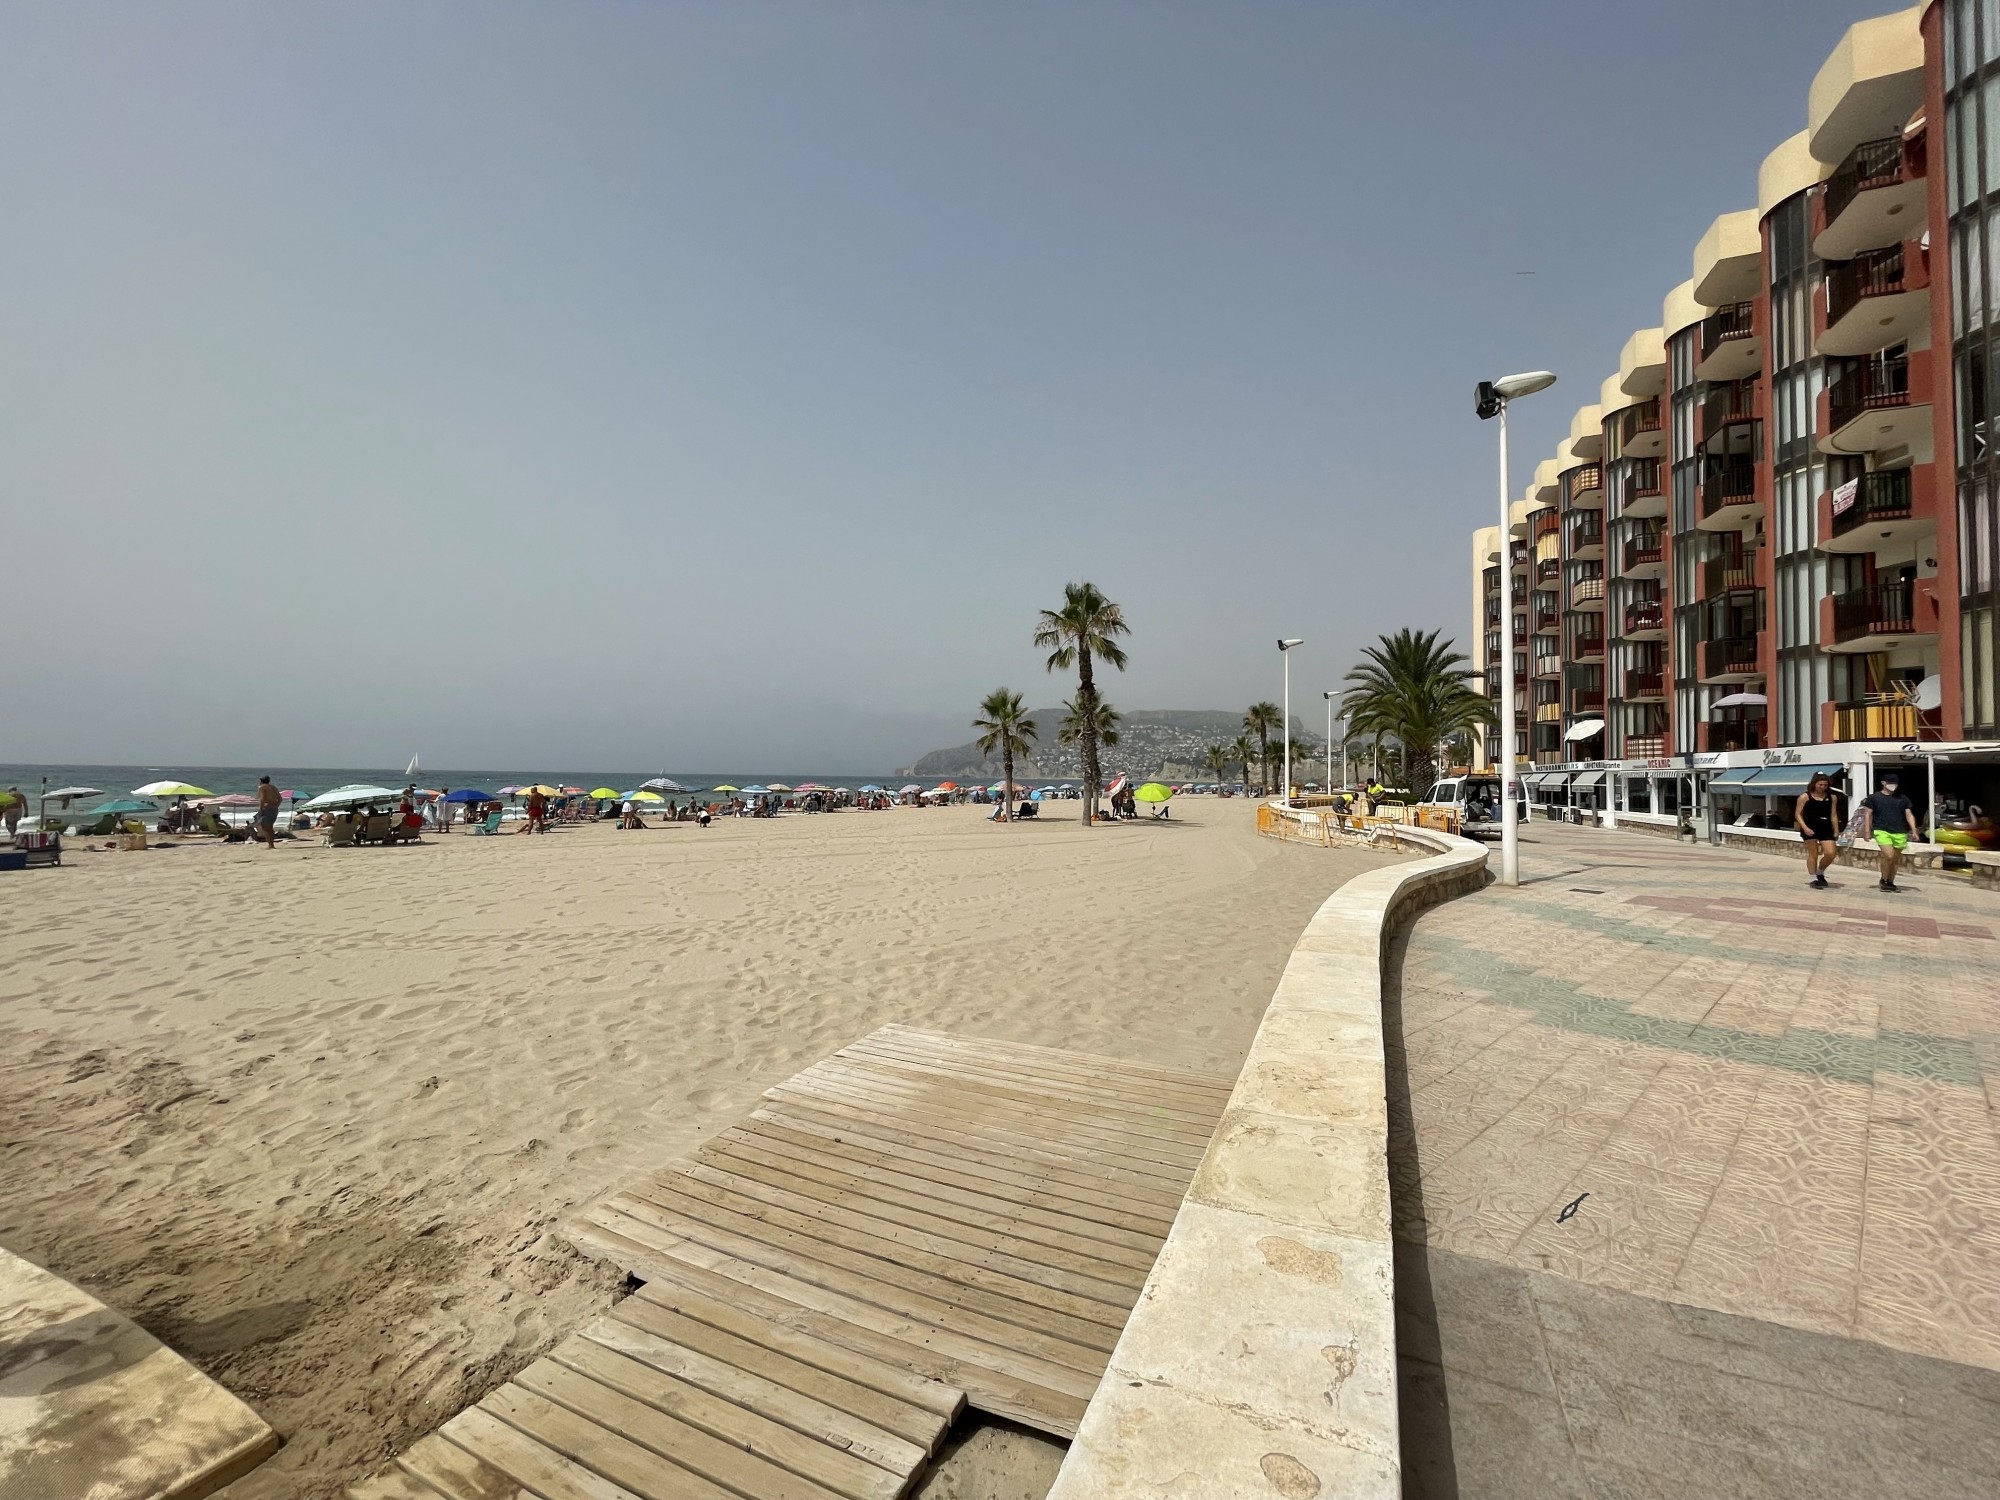 Foto: Playa - Calpe (Alicante), España